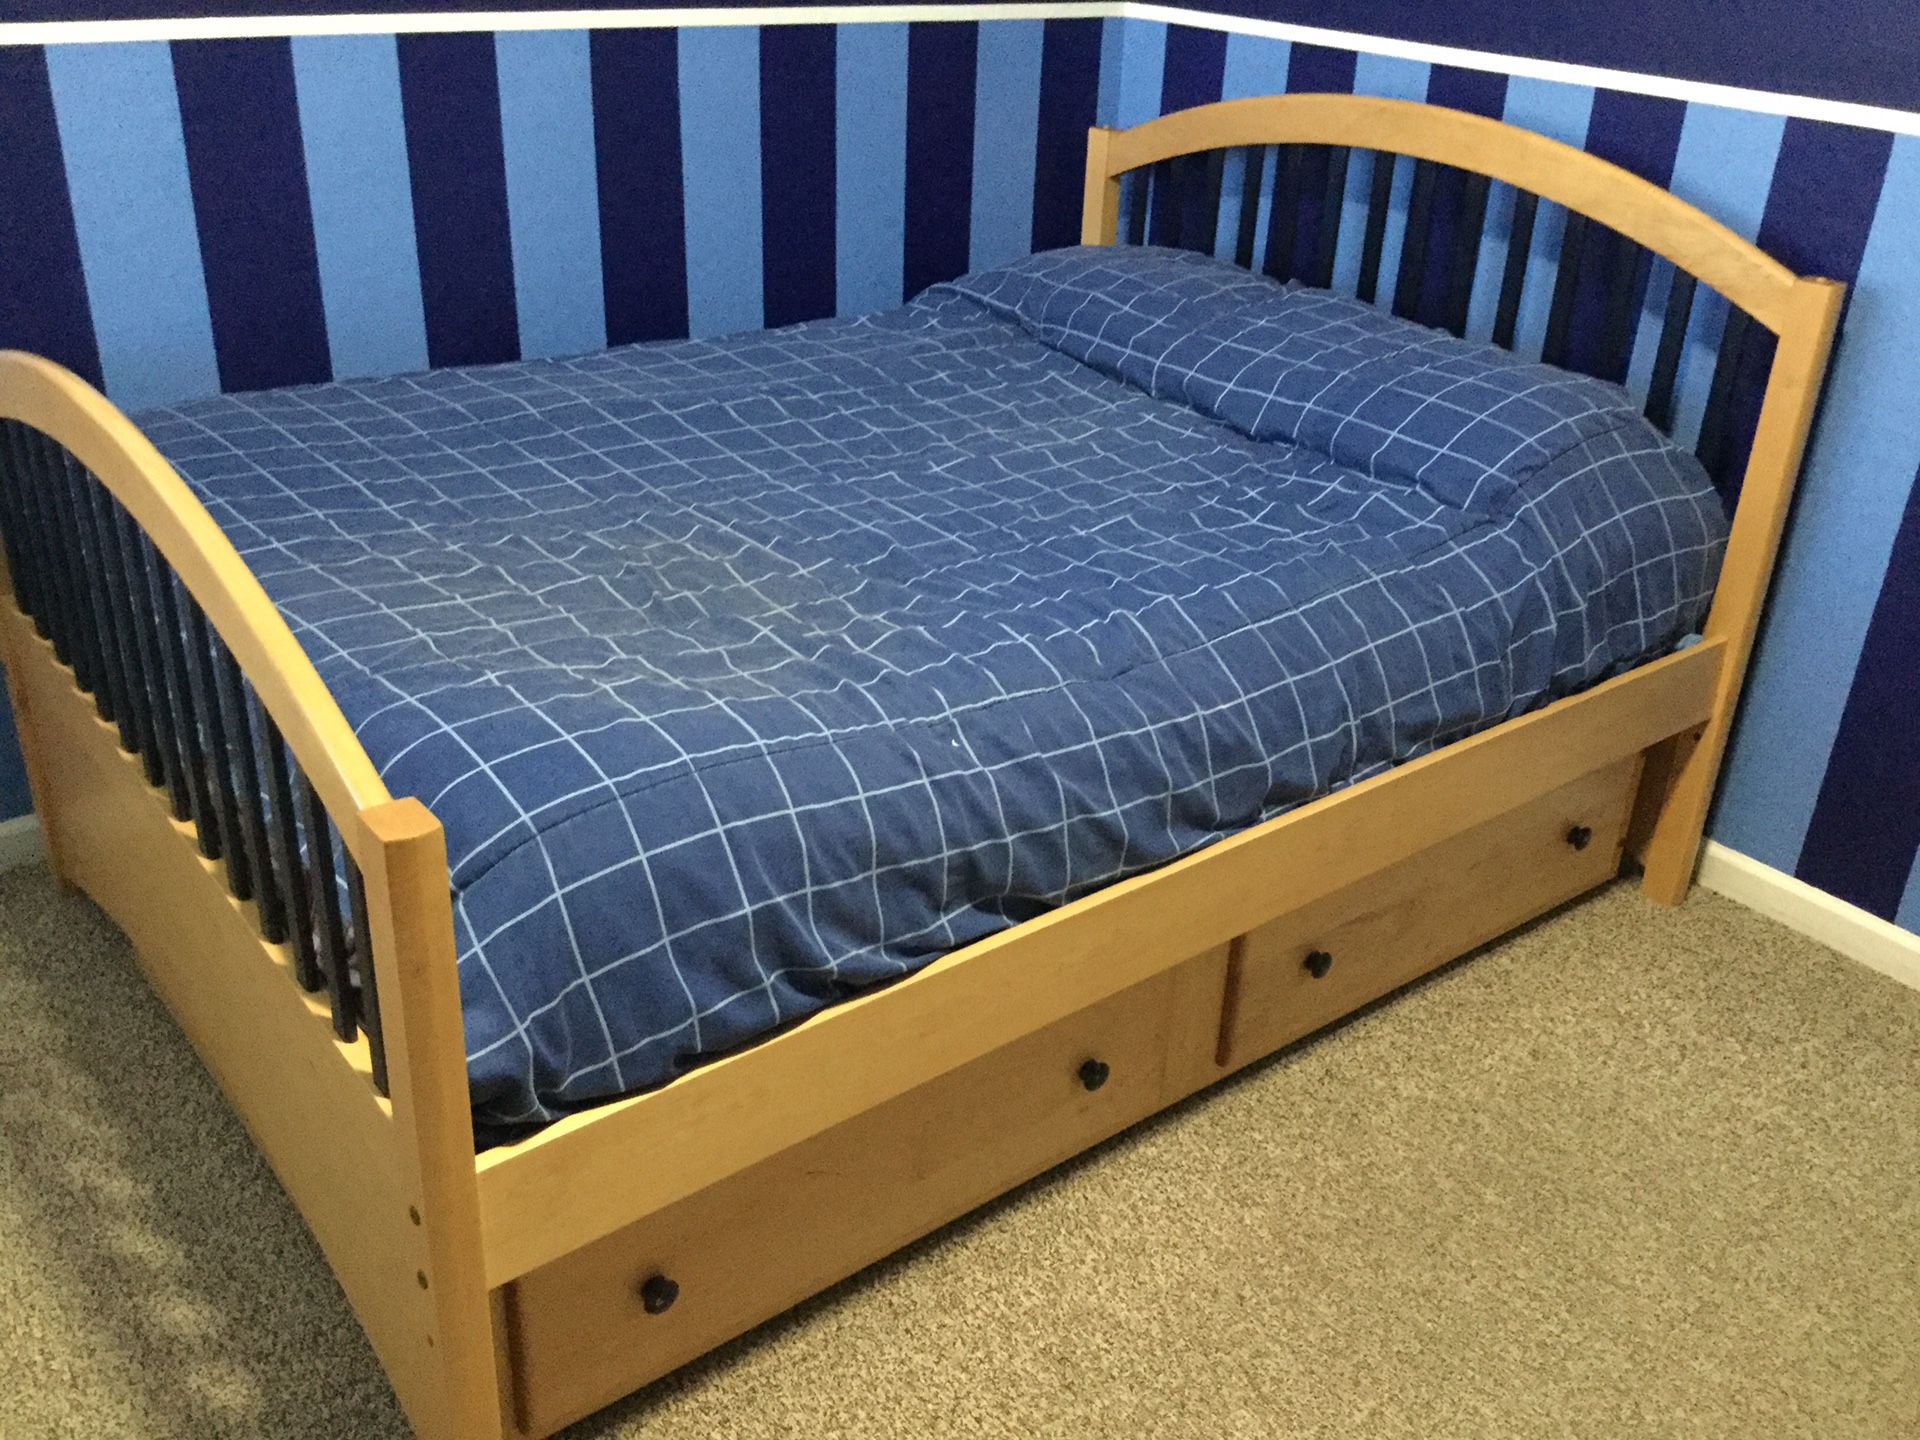 Kids four piece bedroom set - Trundle Bed